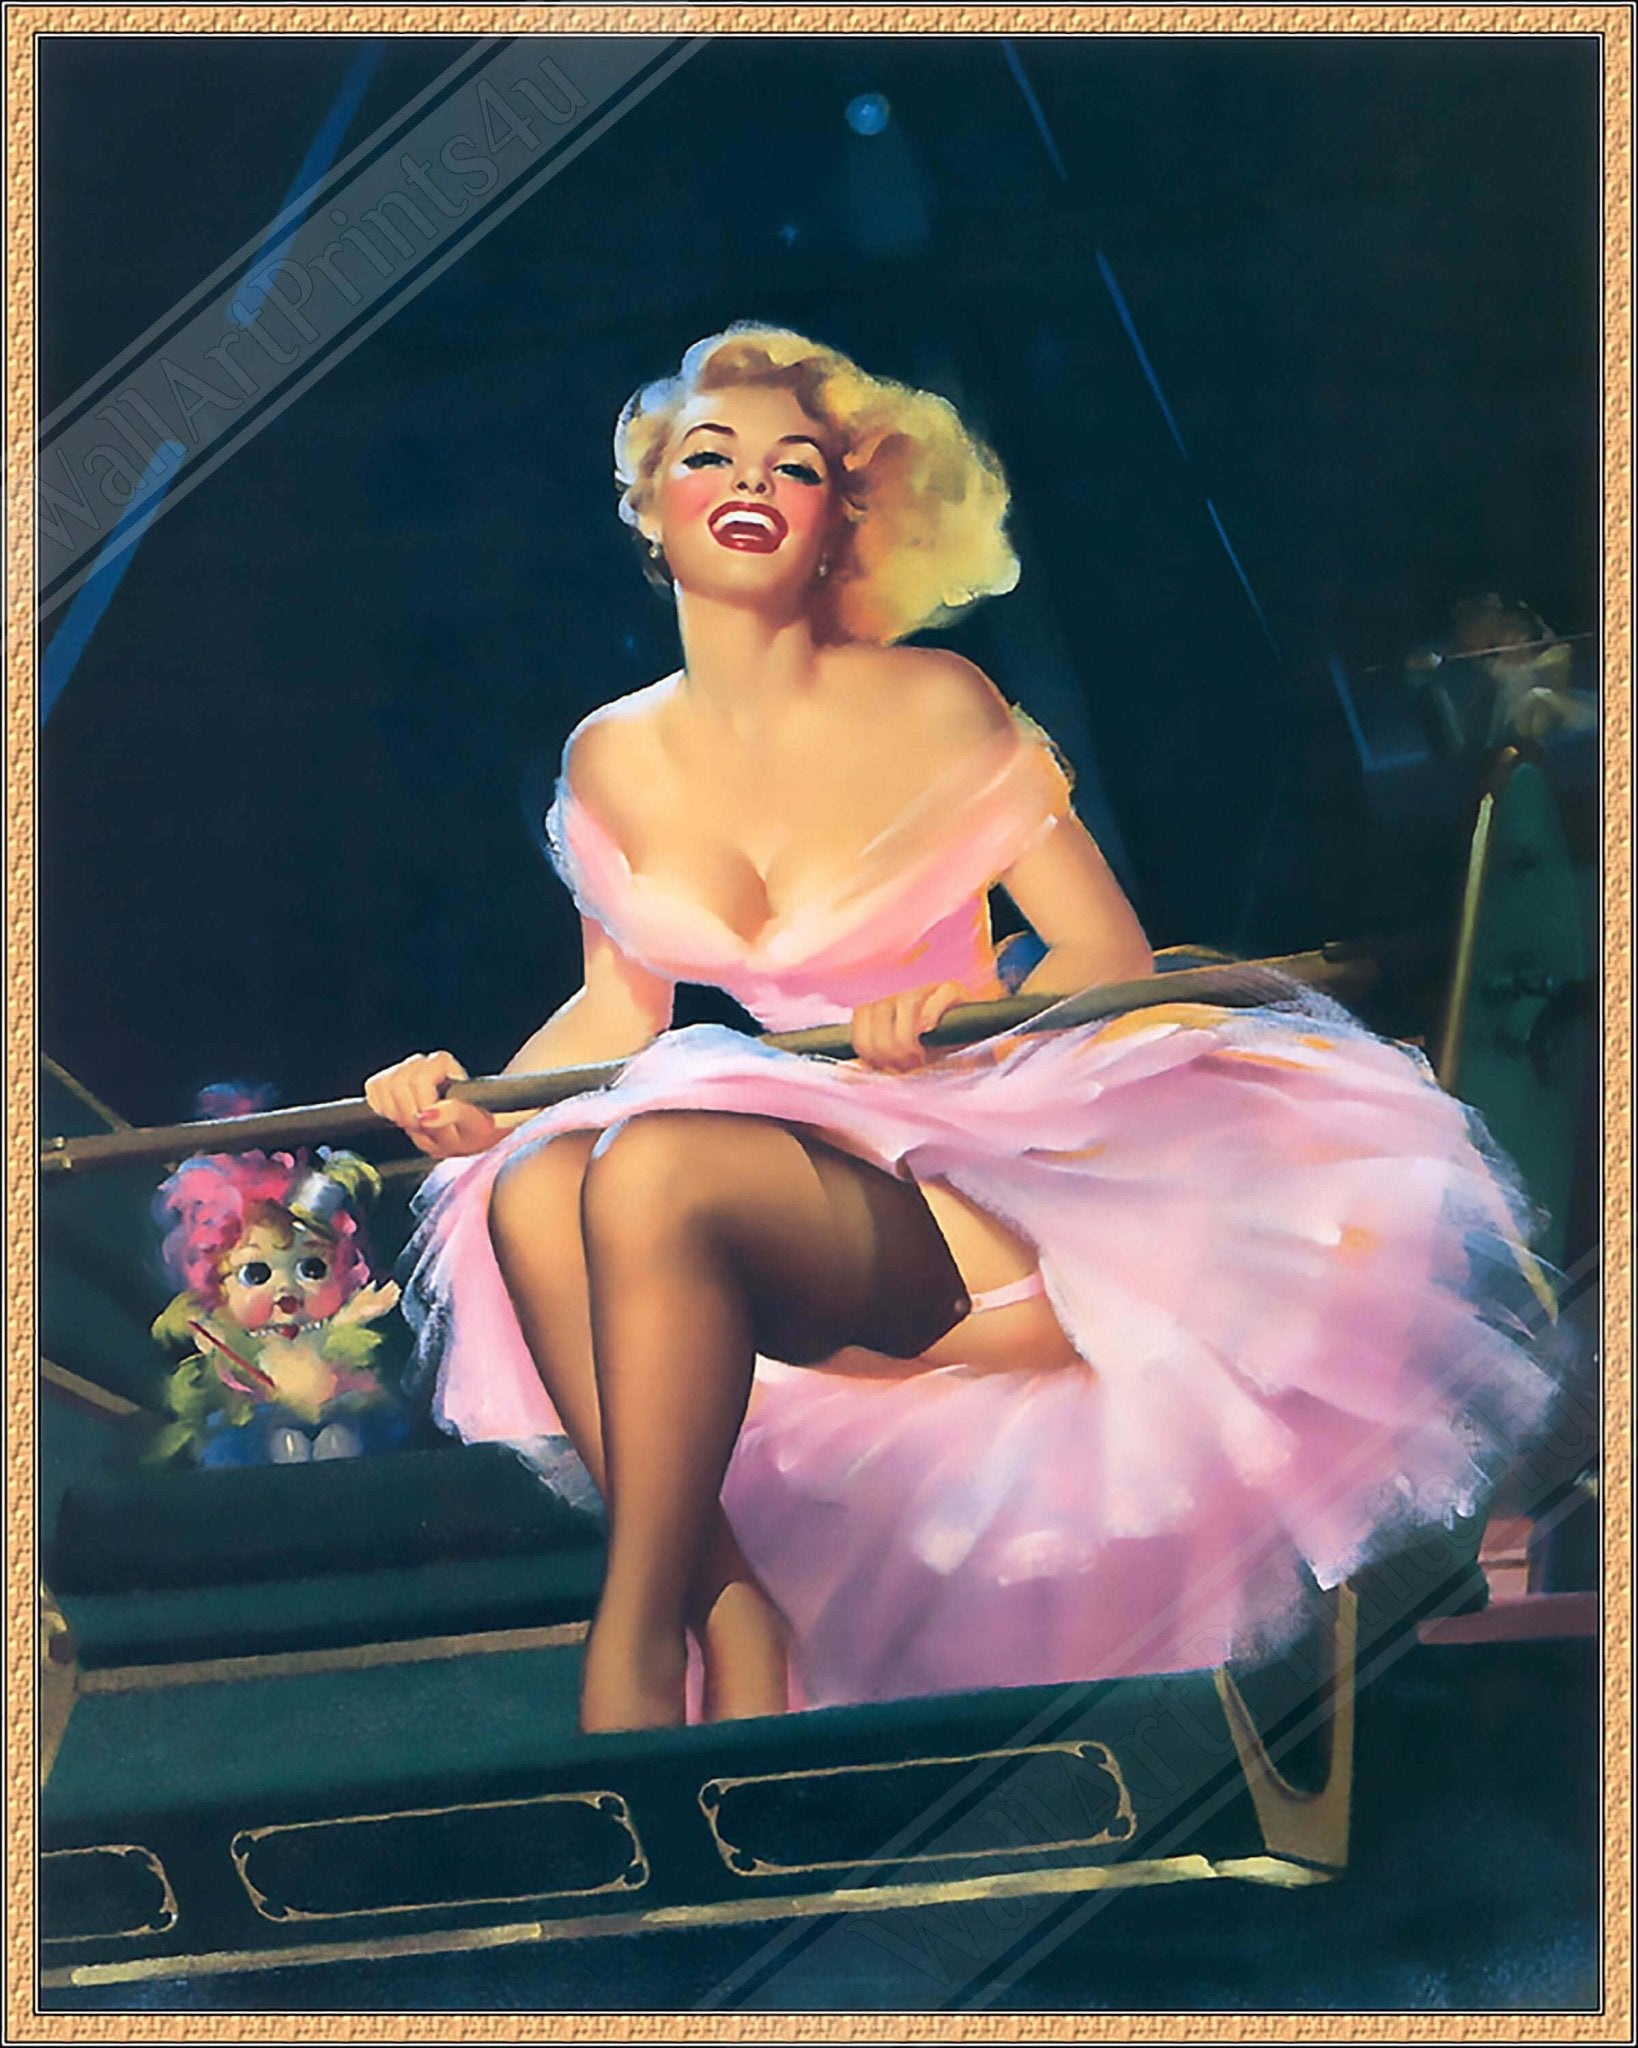 Pin Up Girl Poster, Pink Dress Fairground, Edward Runci - Vintage Art - Retro Pin Up Girl Print - Late 1940'S - 1950'S - WallArtPrints4U